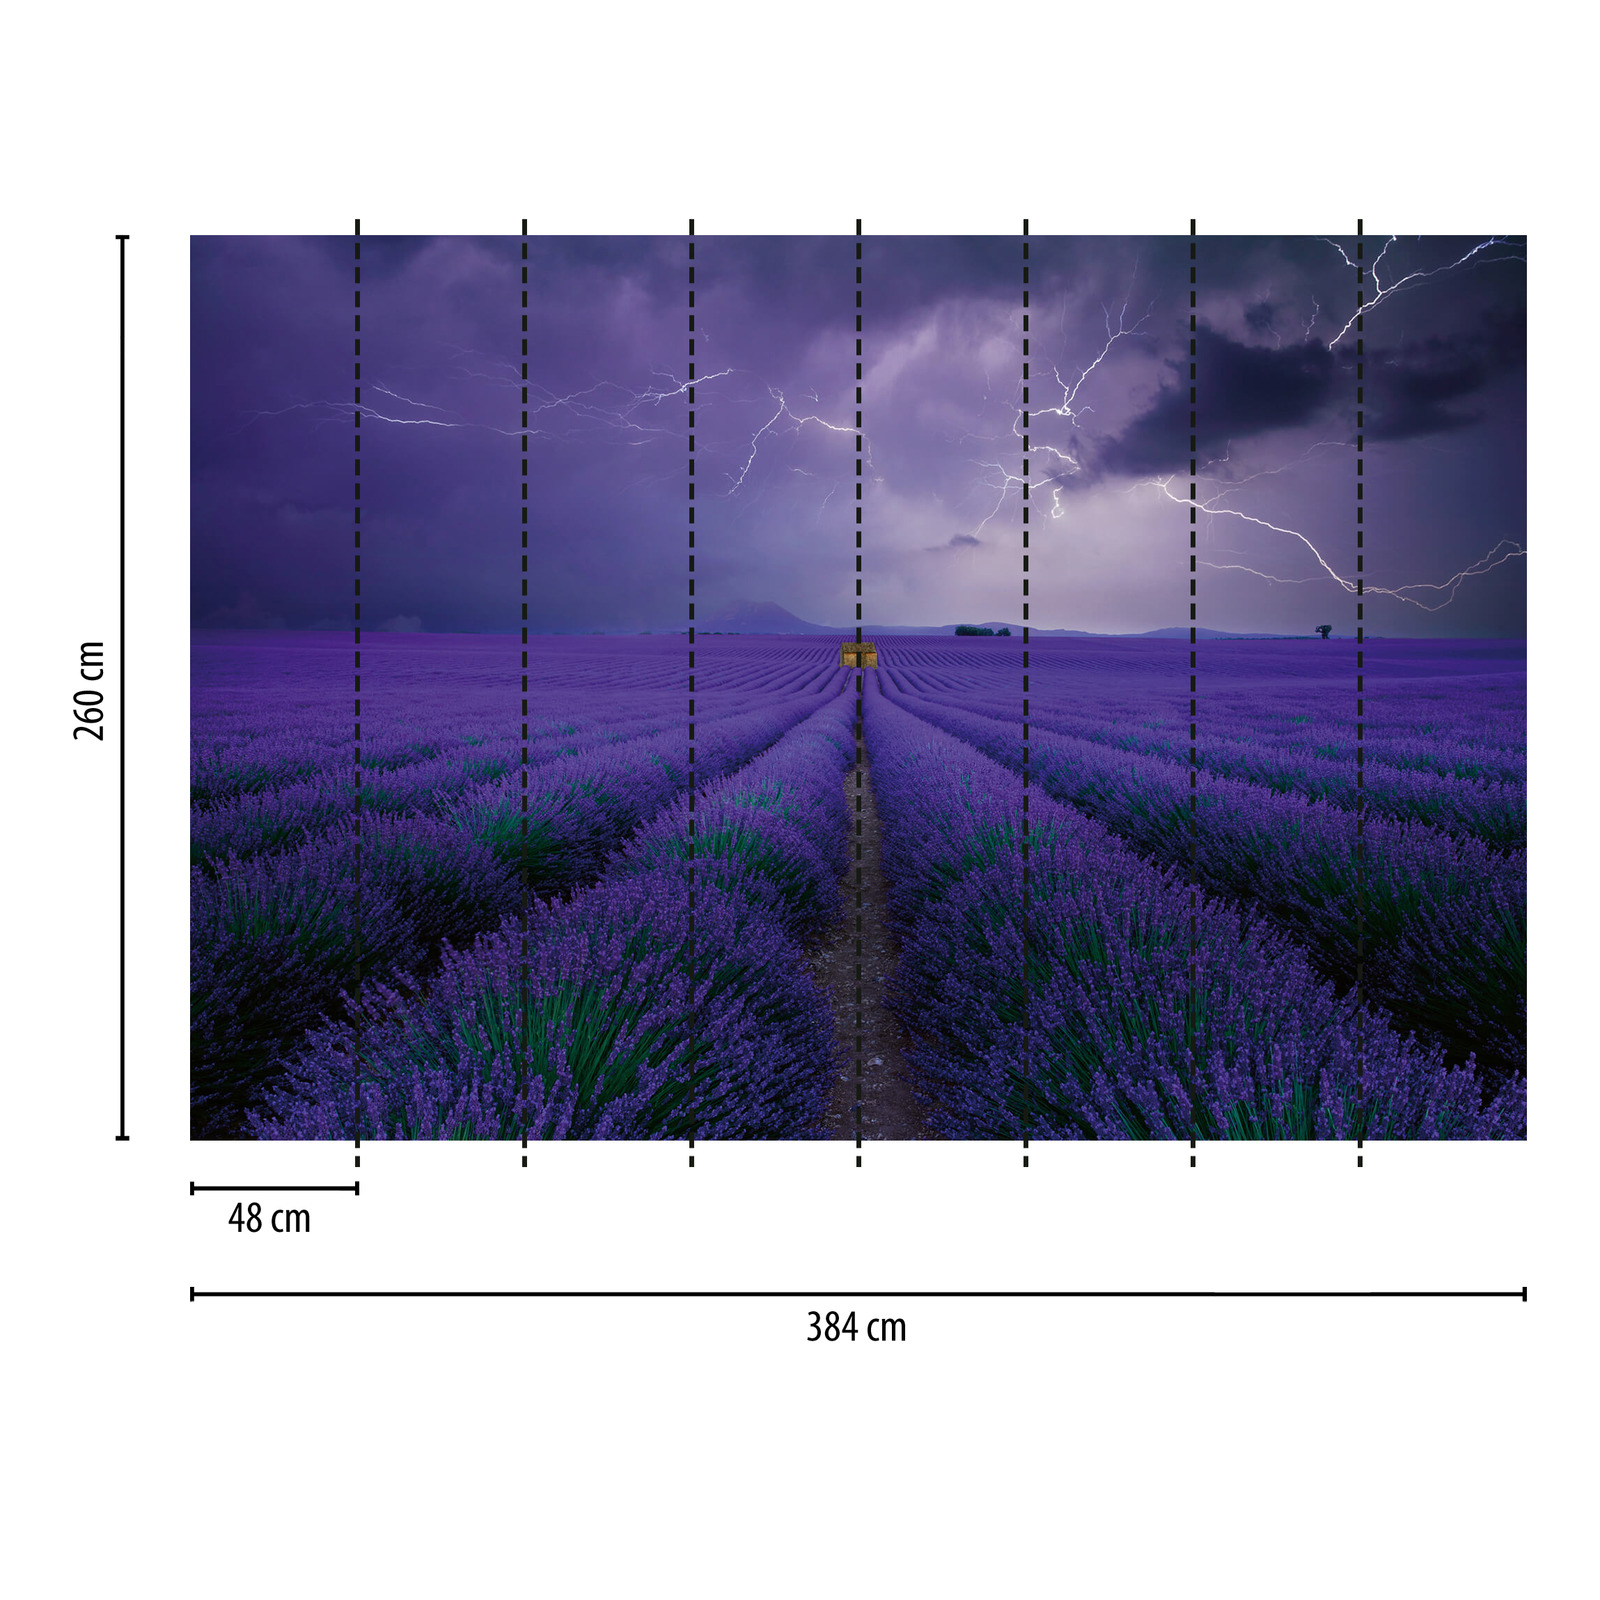             Photo wallpaper lavender field - purple, green, brown
        